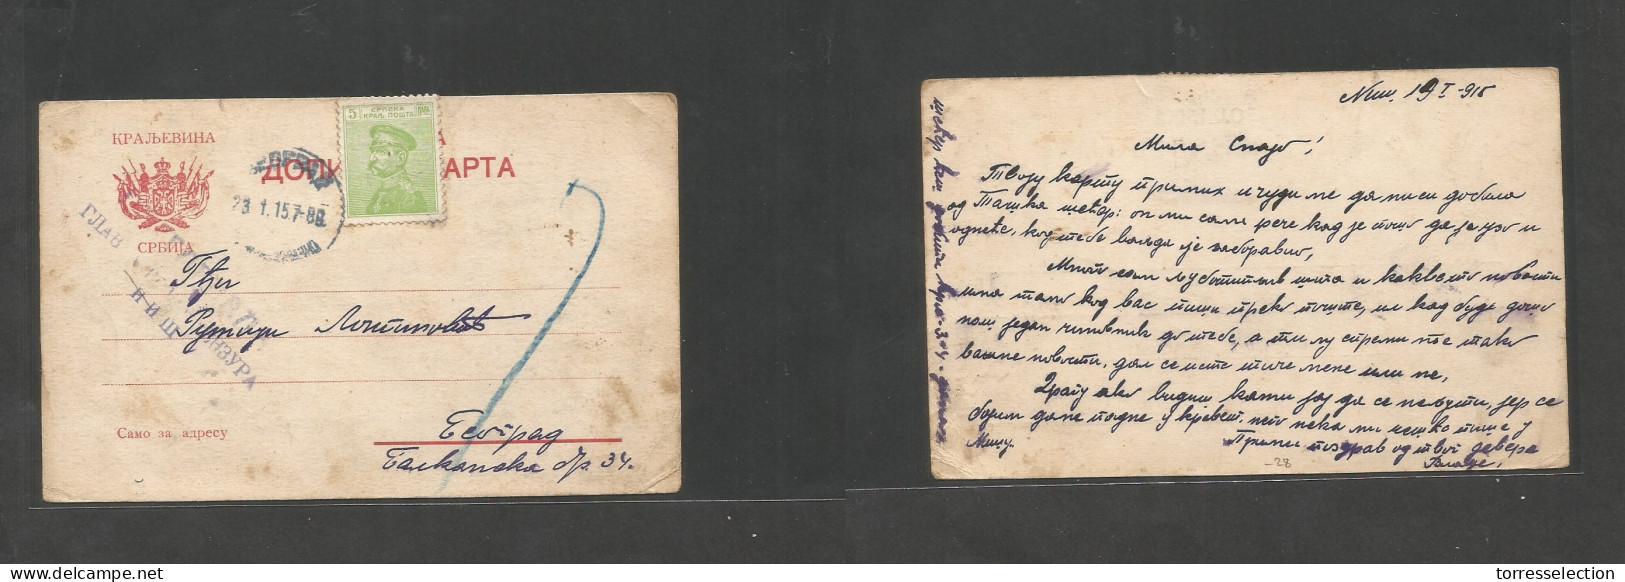 SERBIA. 1915 (23 Jan) Num - Belgrade. WWI. Fkd Military Card 5p Light Green, Censor Cachet. Fine. - Serbia